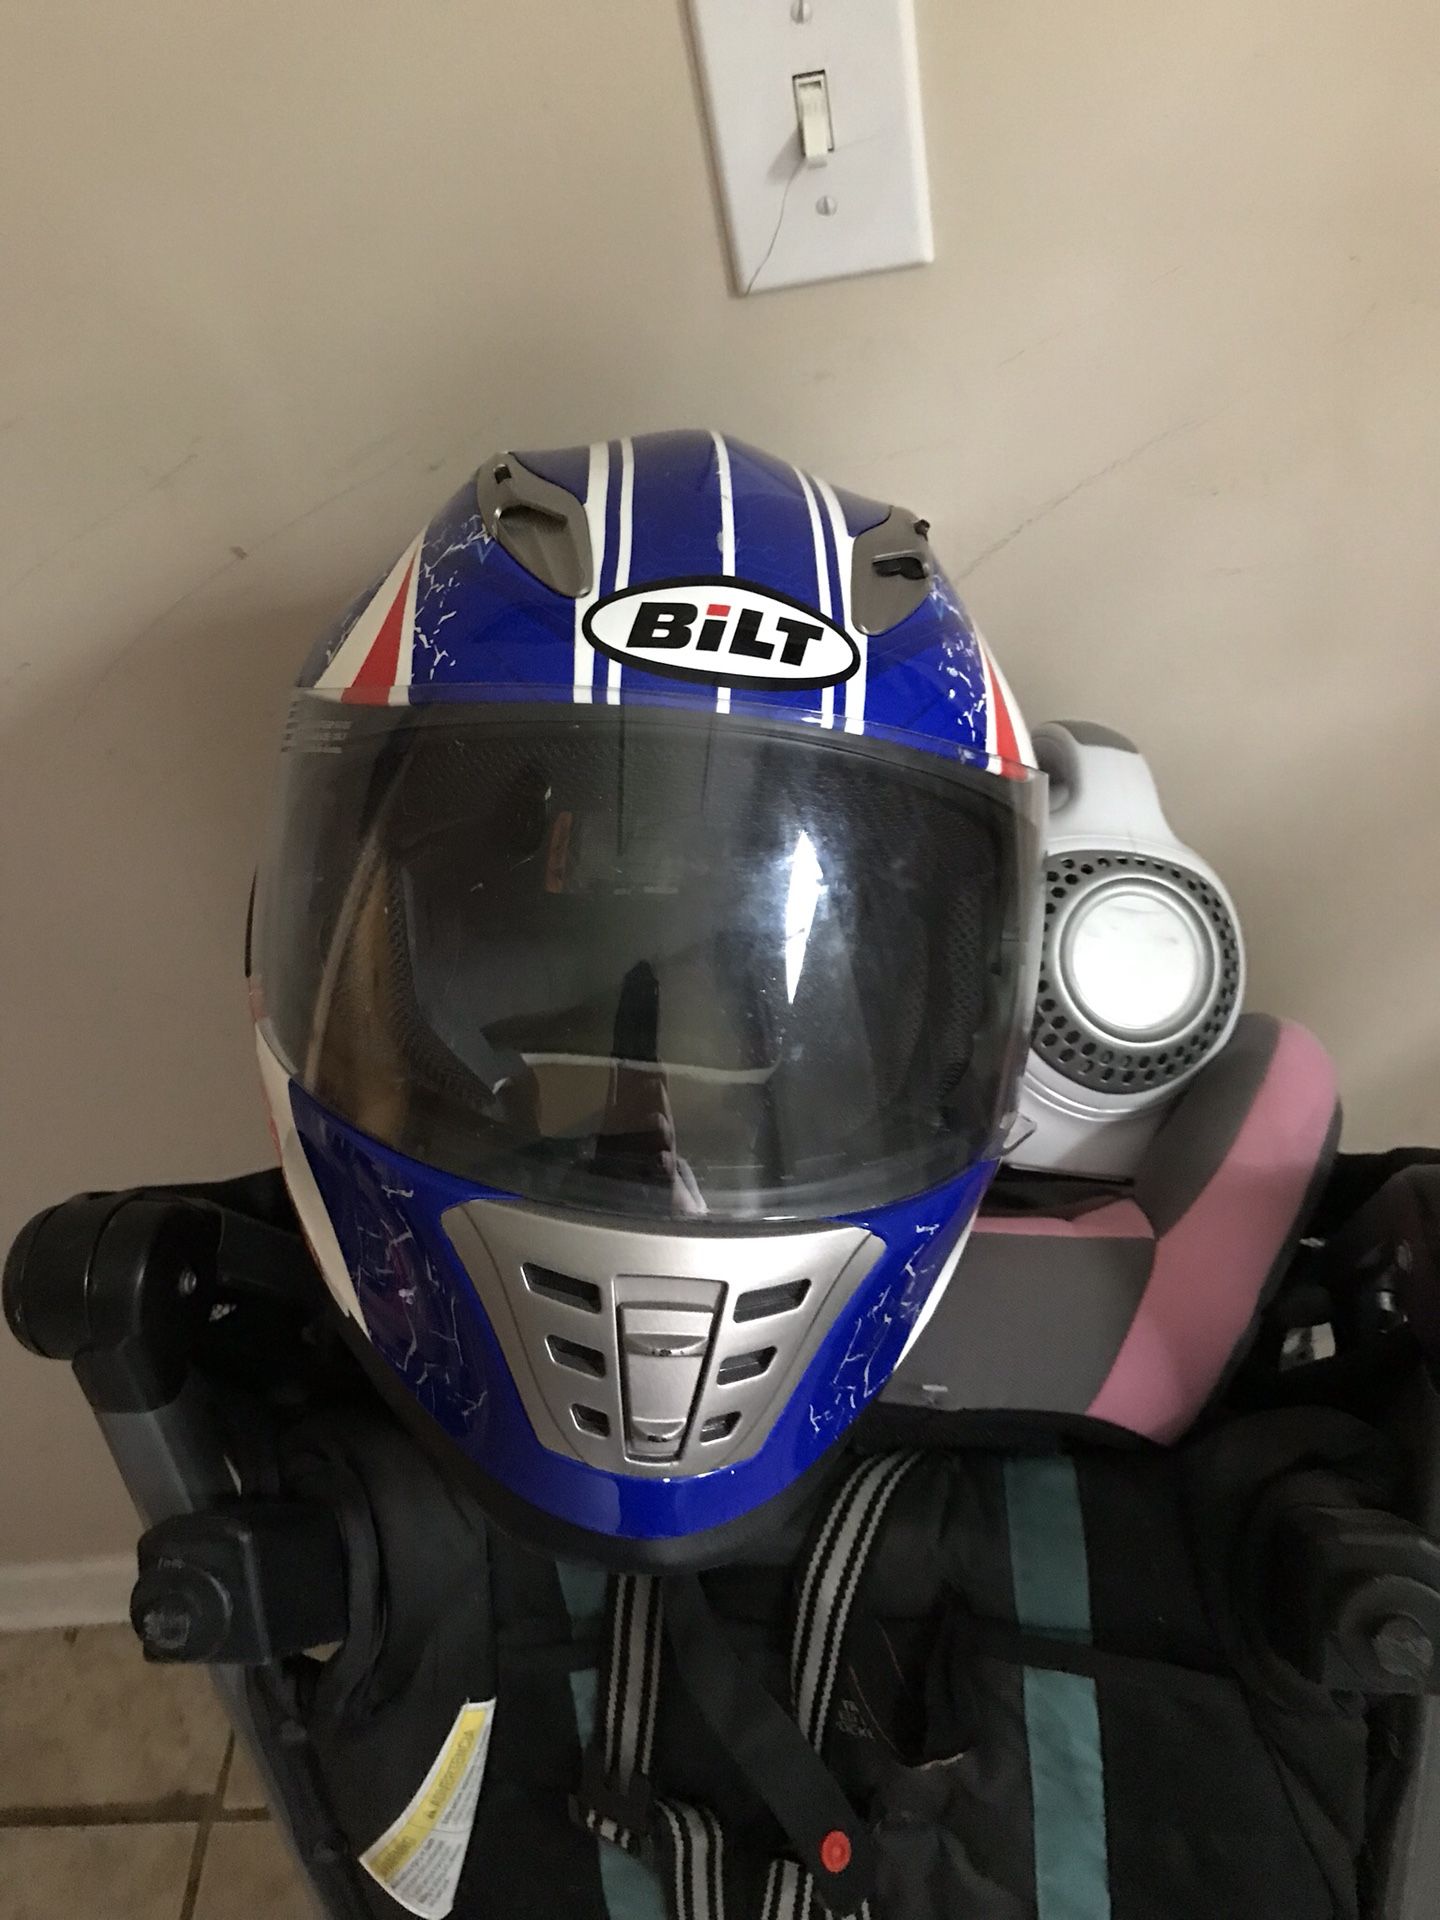 Bilt Raptor motorcycle helmet